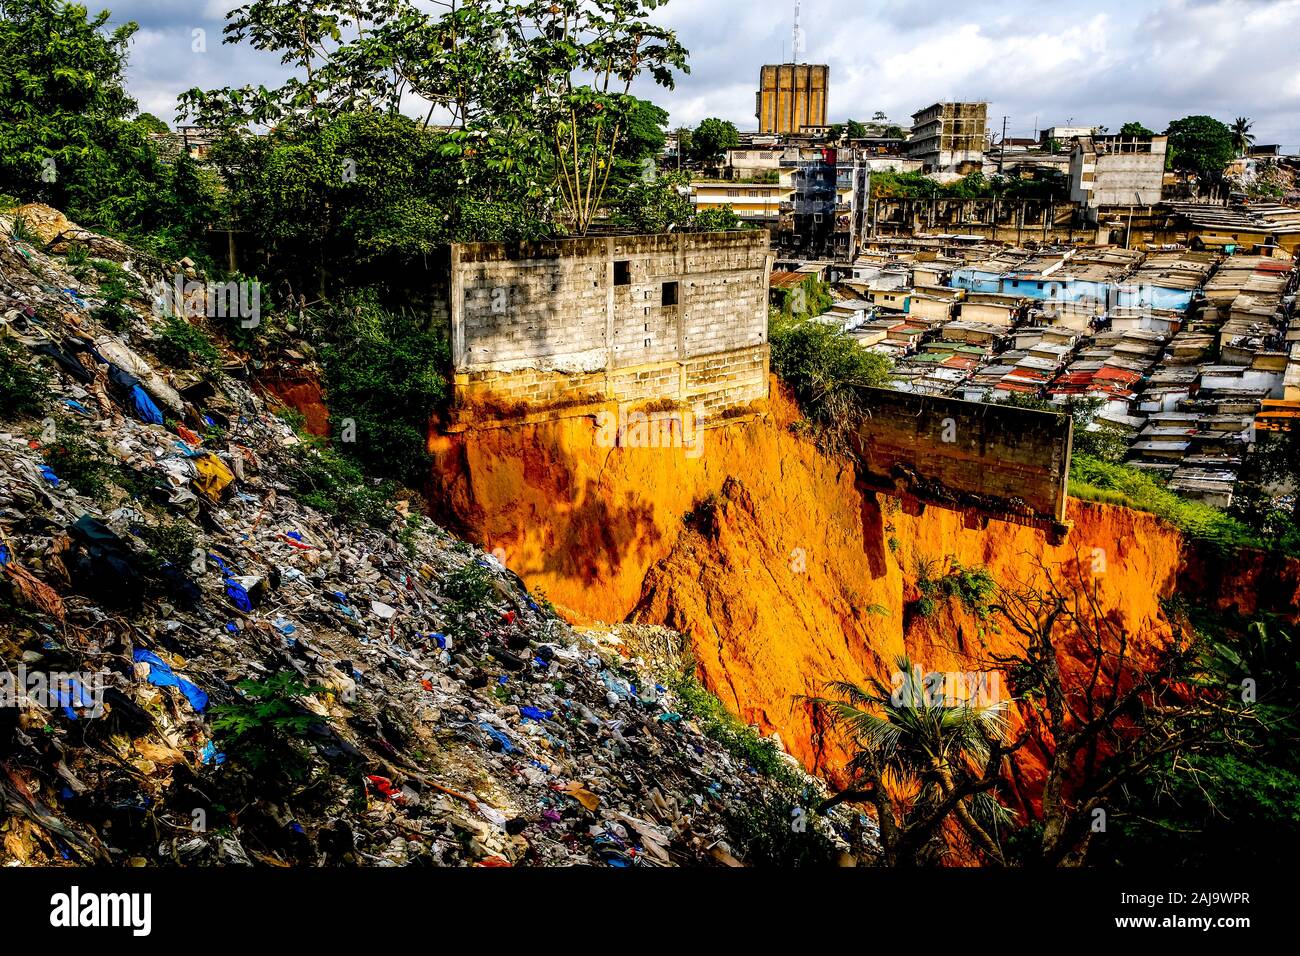 Waste and slums in abidjan, ivory coast Stock Photo